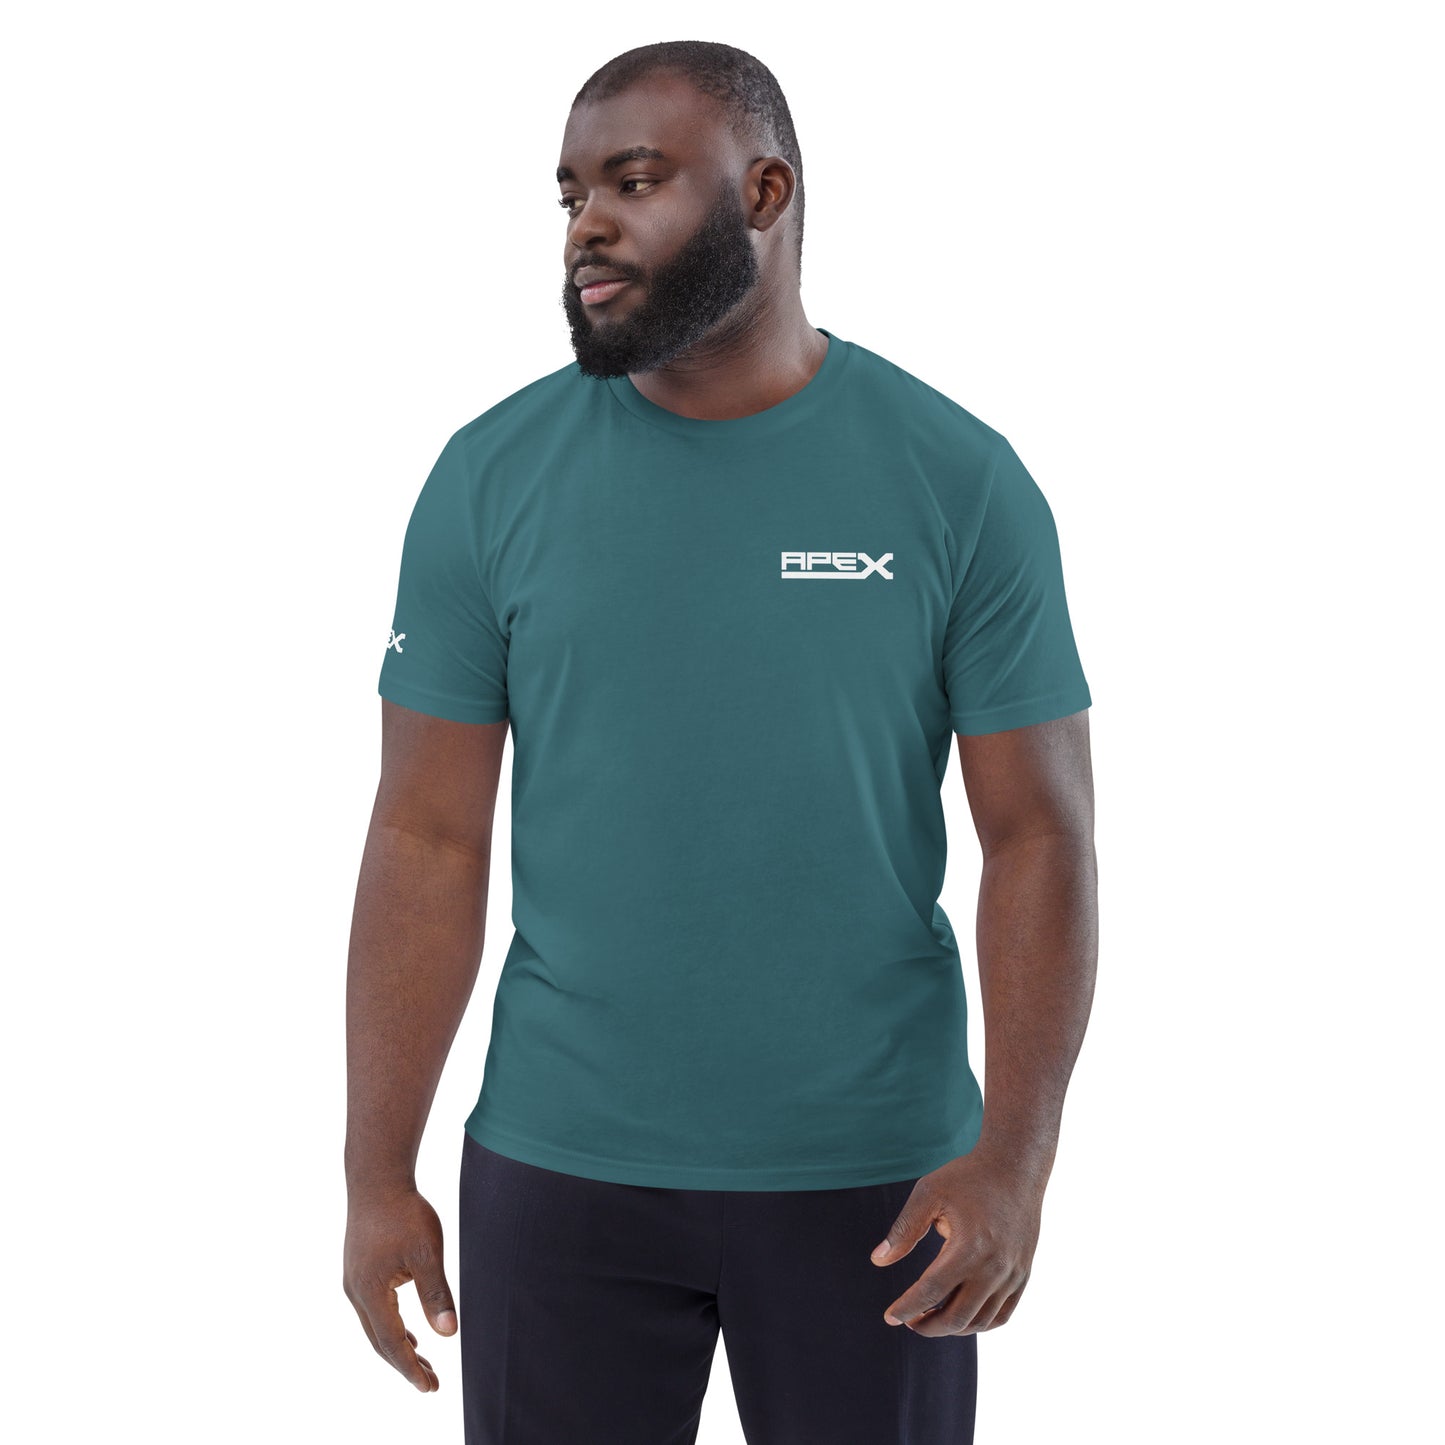 Unisex organic cotton team t-shirt